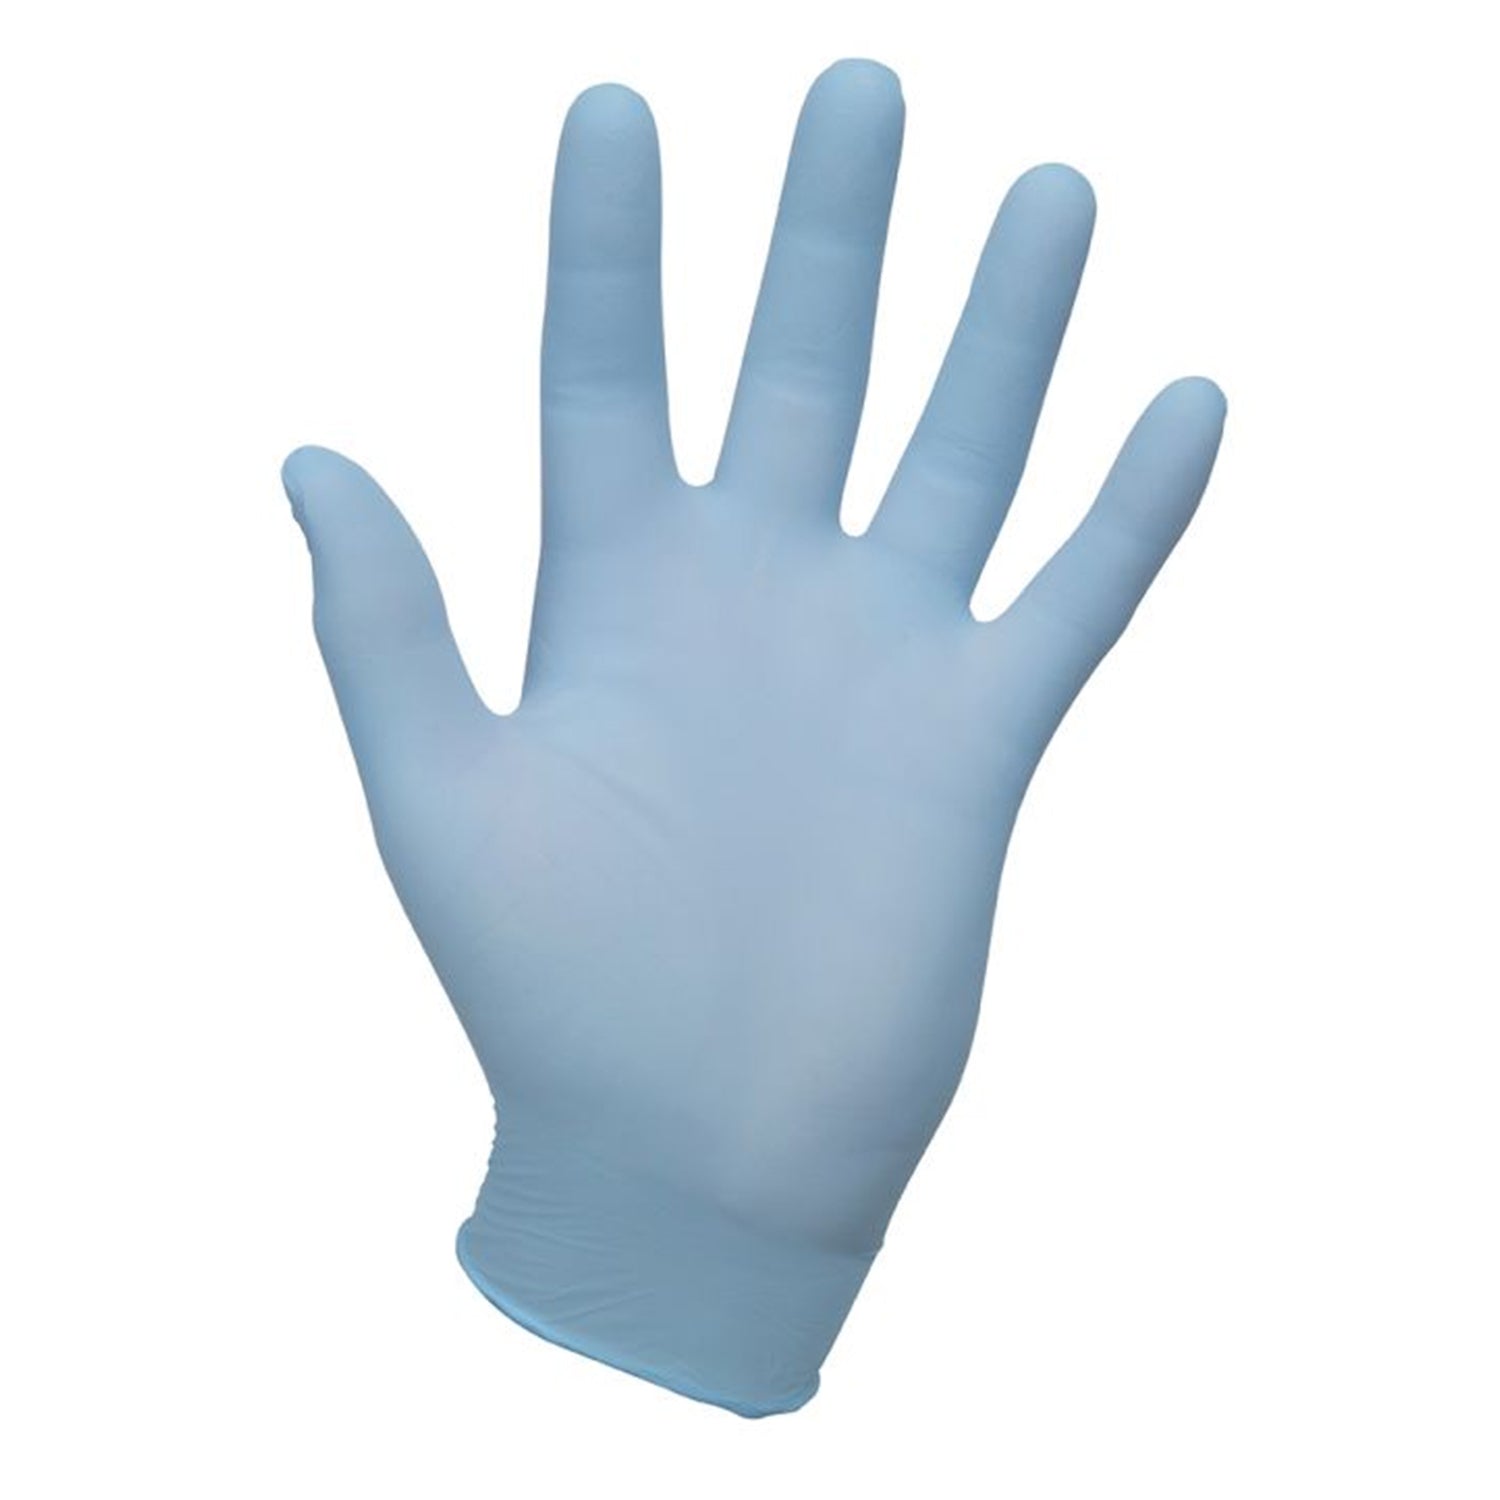 Premier AF Nitrile Examination Gloves | Sterile | Latex Free | Medium | Pack of 50 Pairs (4)